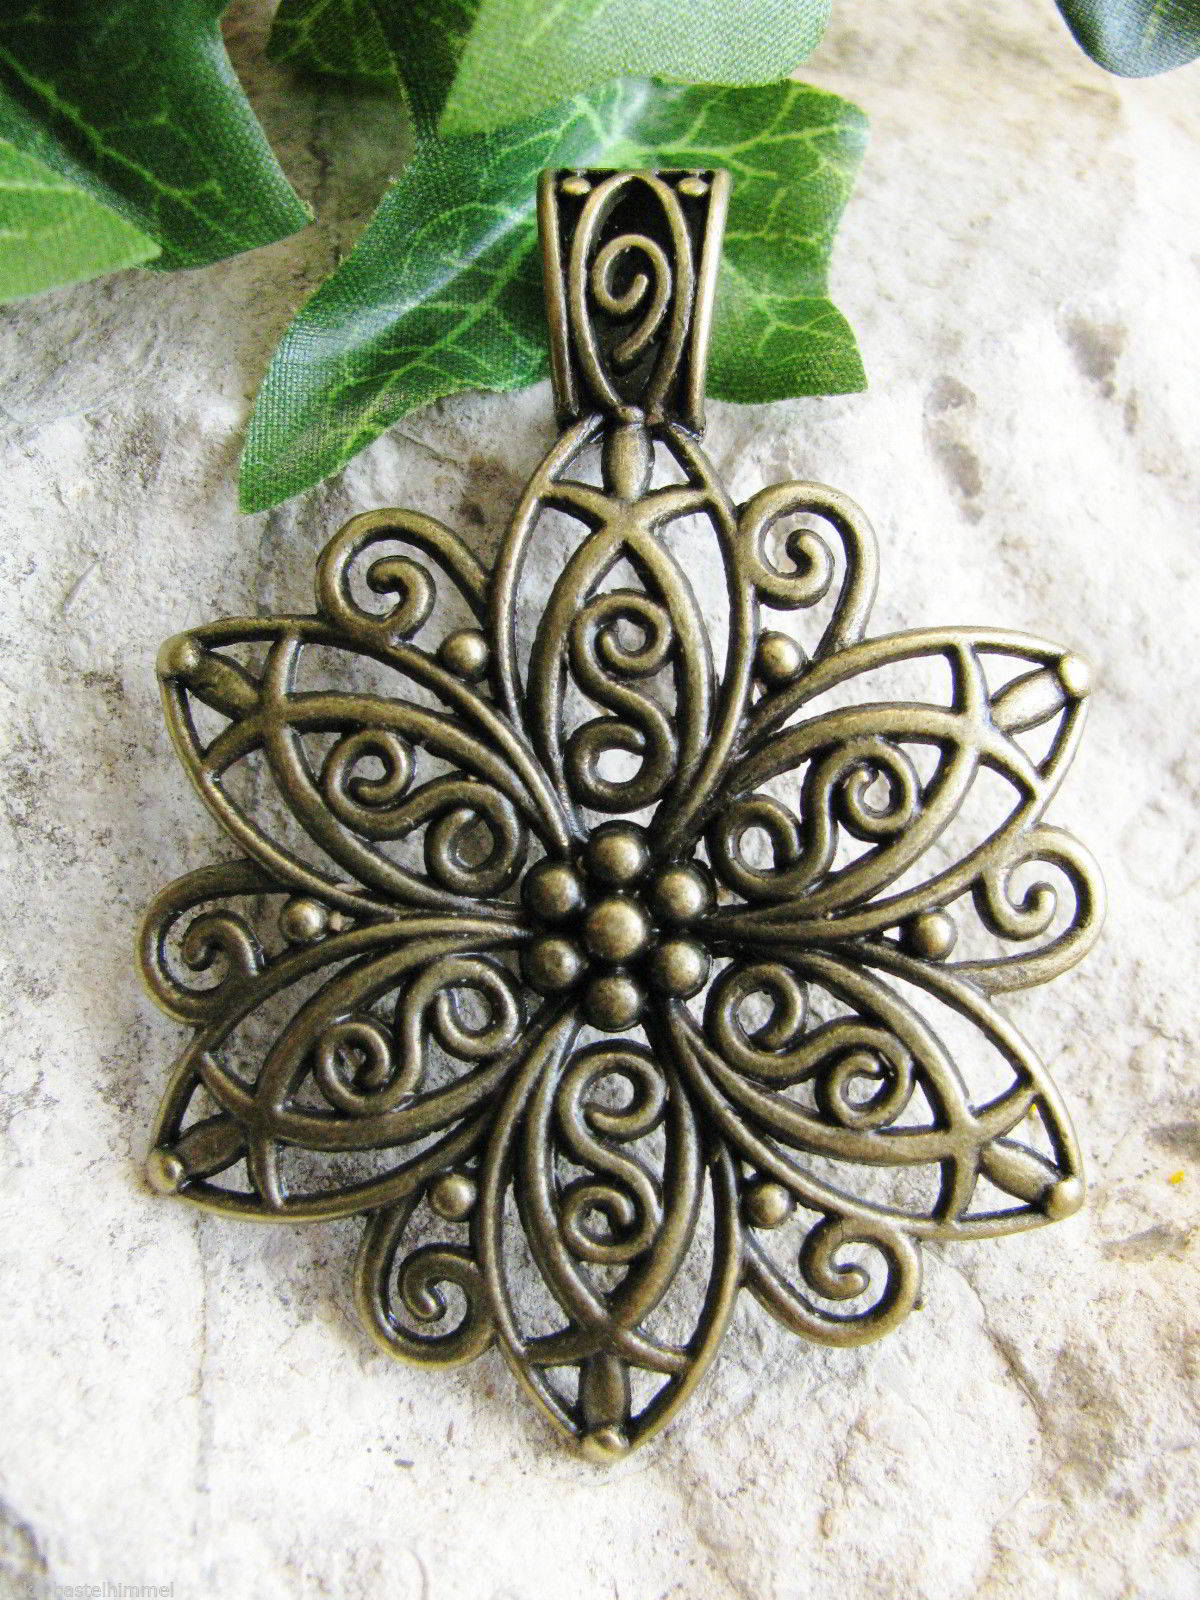 Metallanhänger Blüte bronze farben 6,4cm, breite Öse, Anhänger Modeschmuck Blume